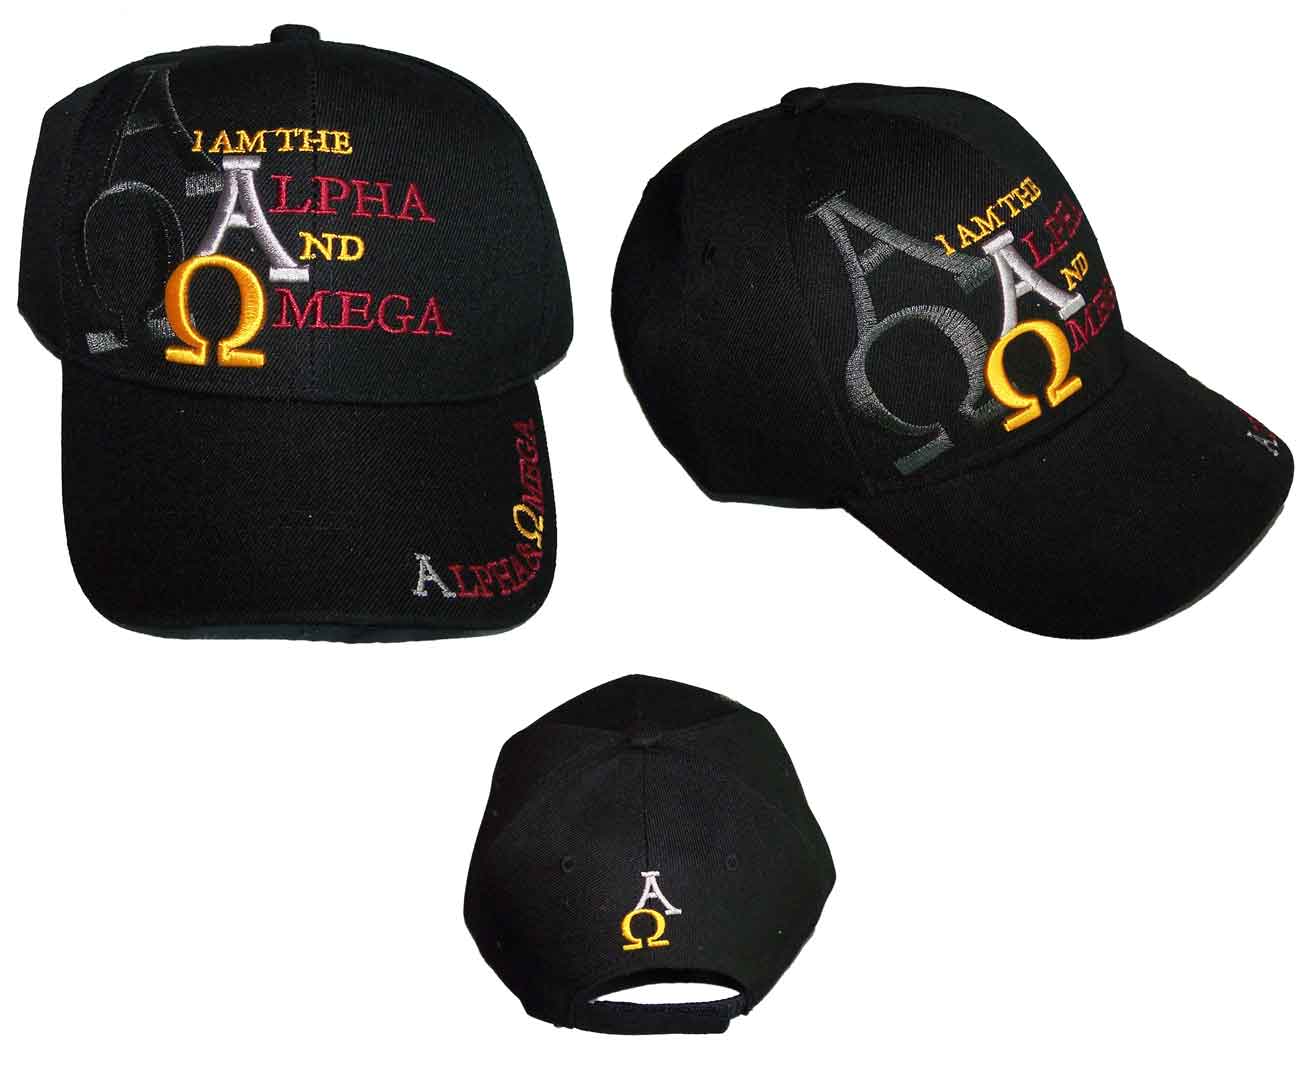 I Am The Apha & Omega Christian Baseball Caps Embroidered - Black